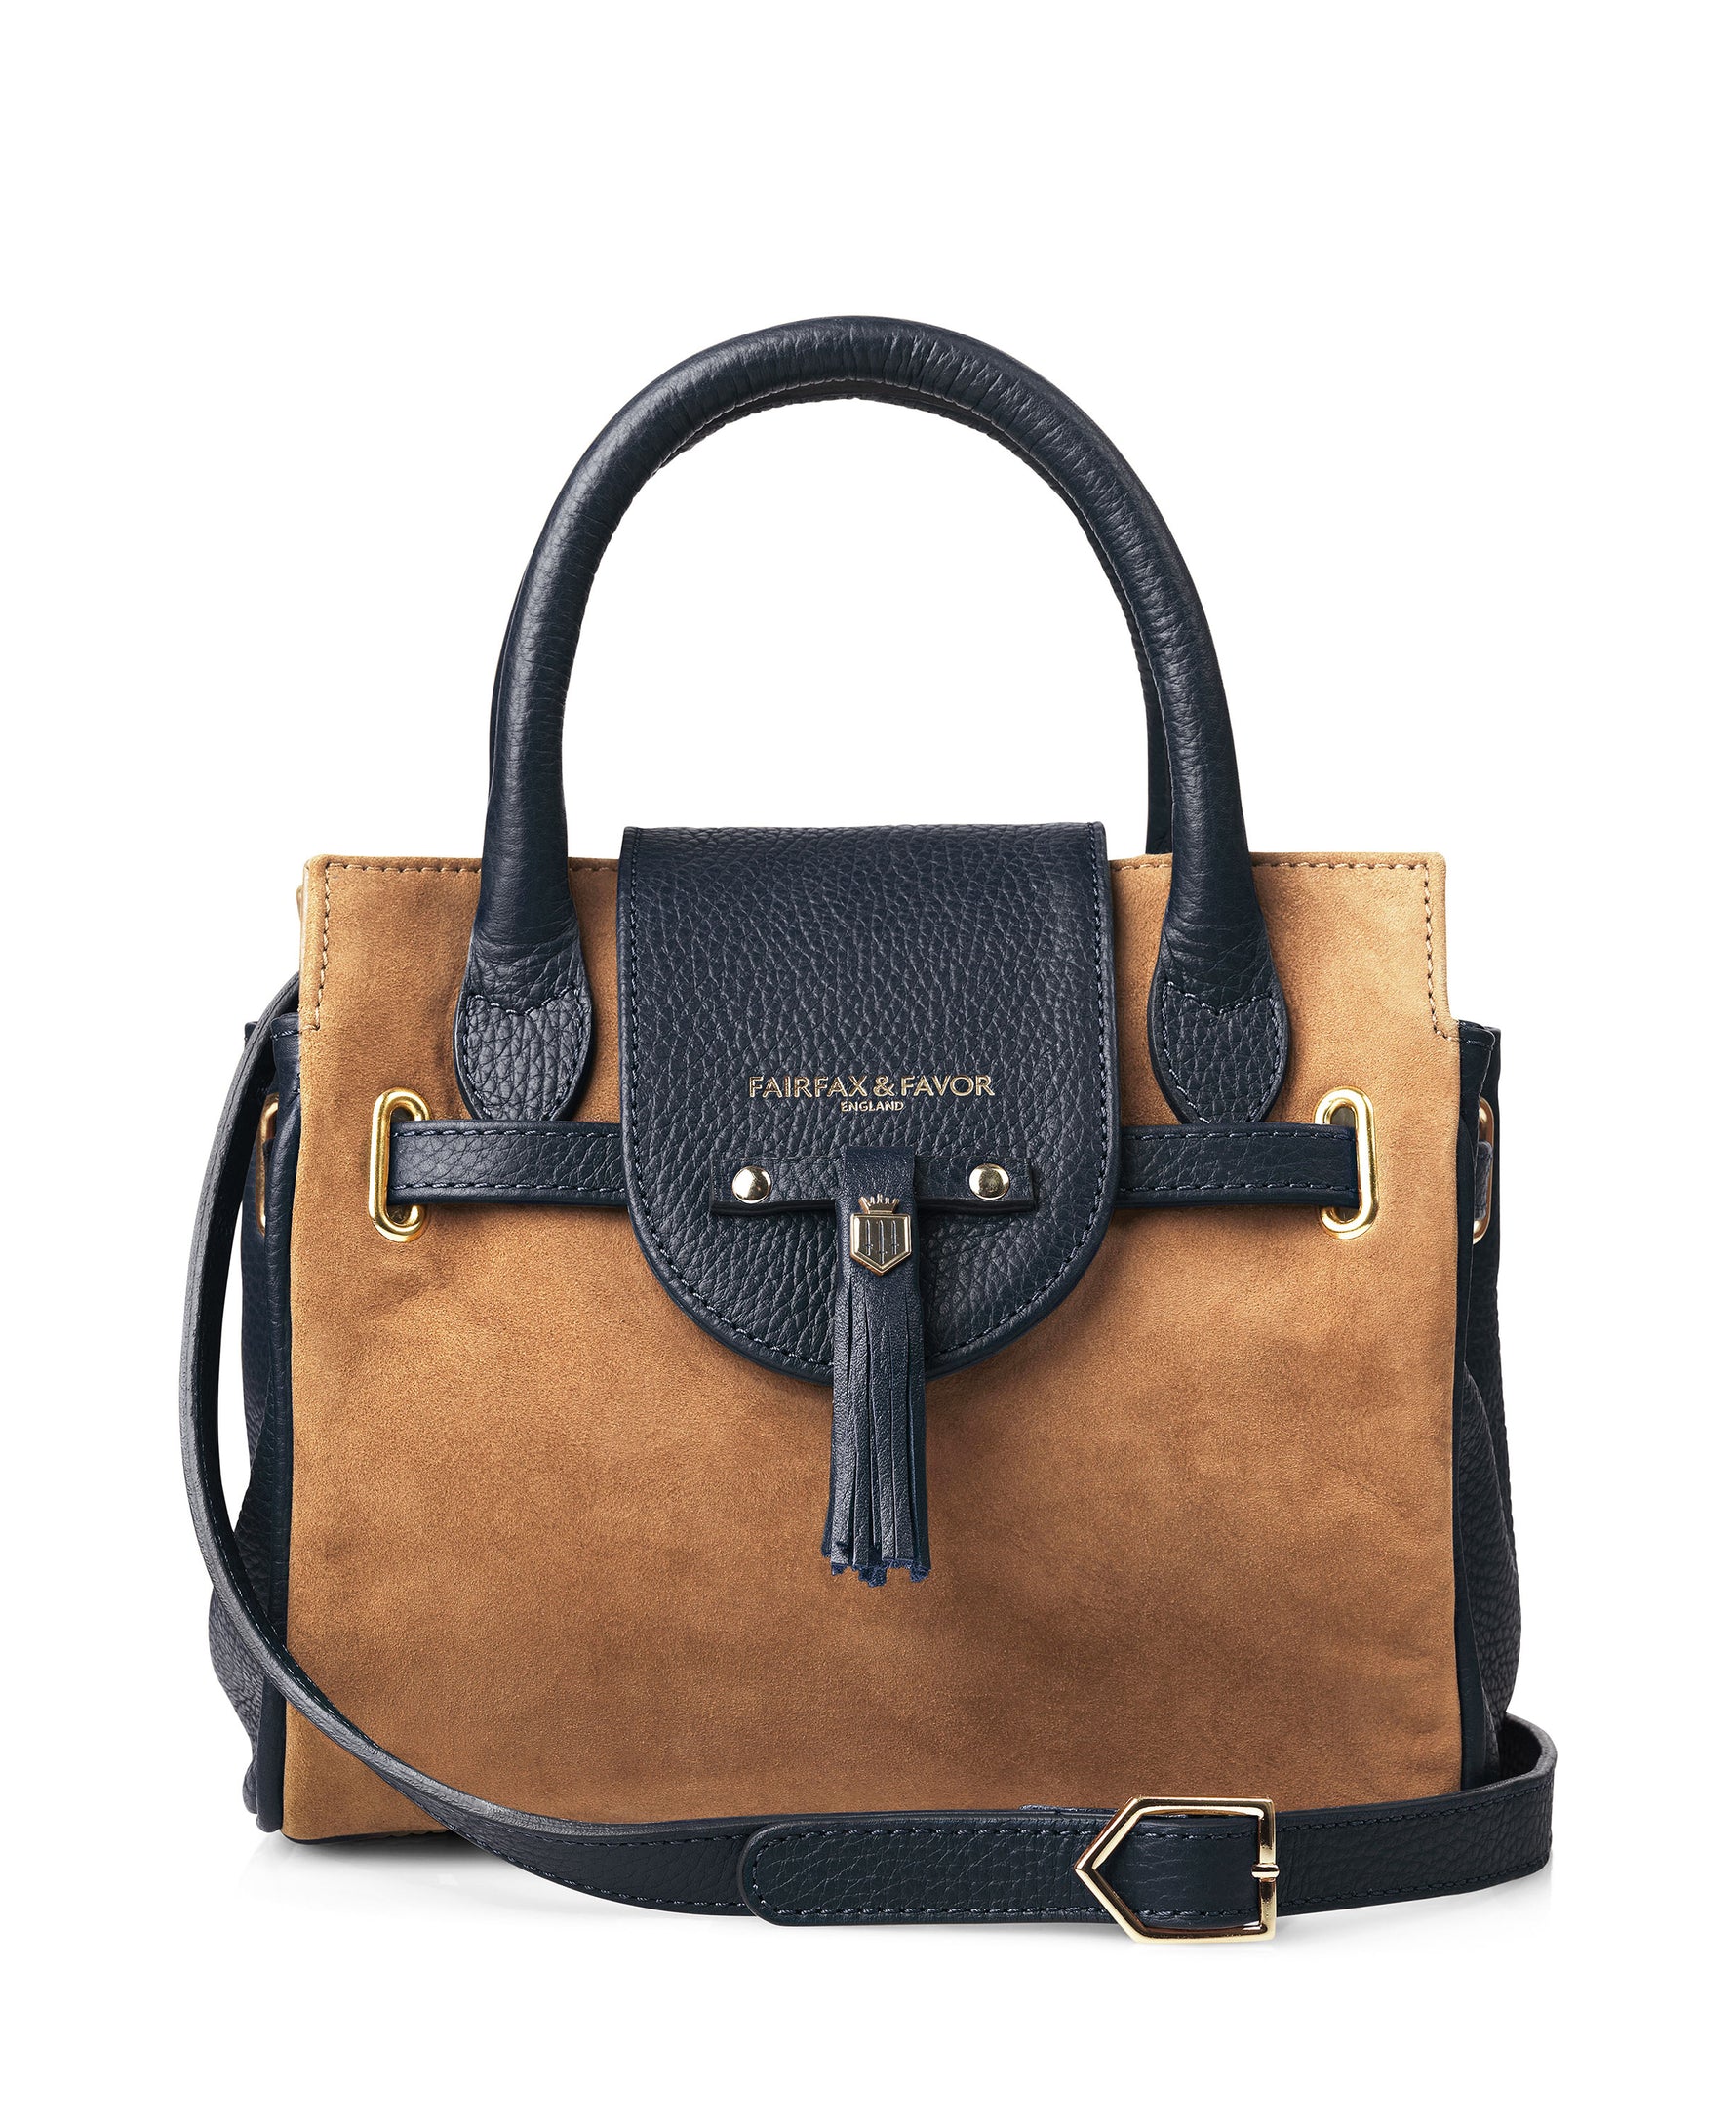 Landmark | Fairfax & Favor Mini Windsor Handbag - Tan/Navy